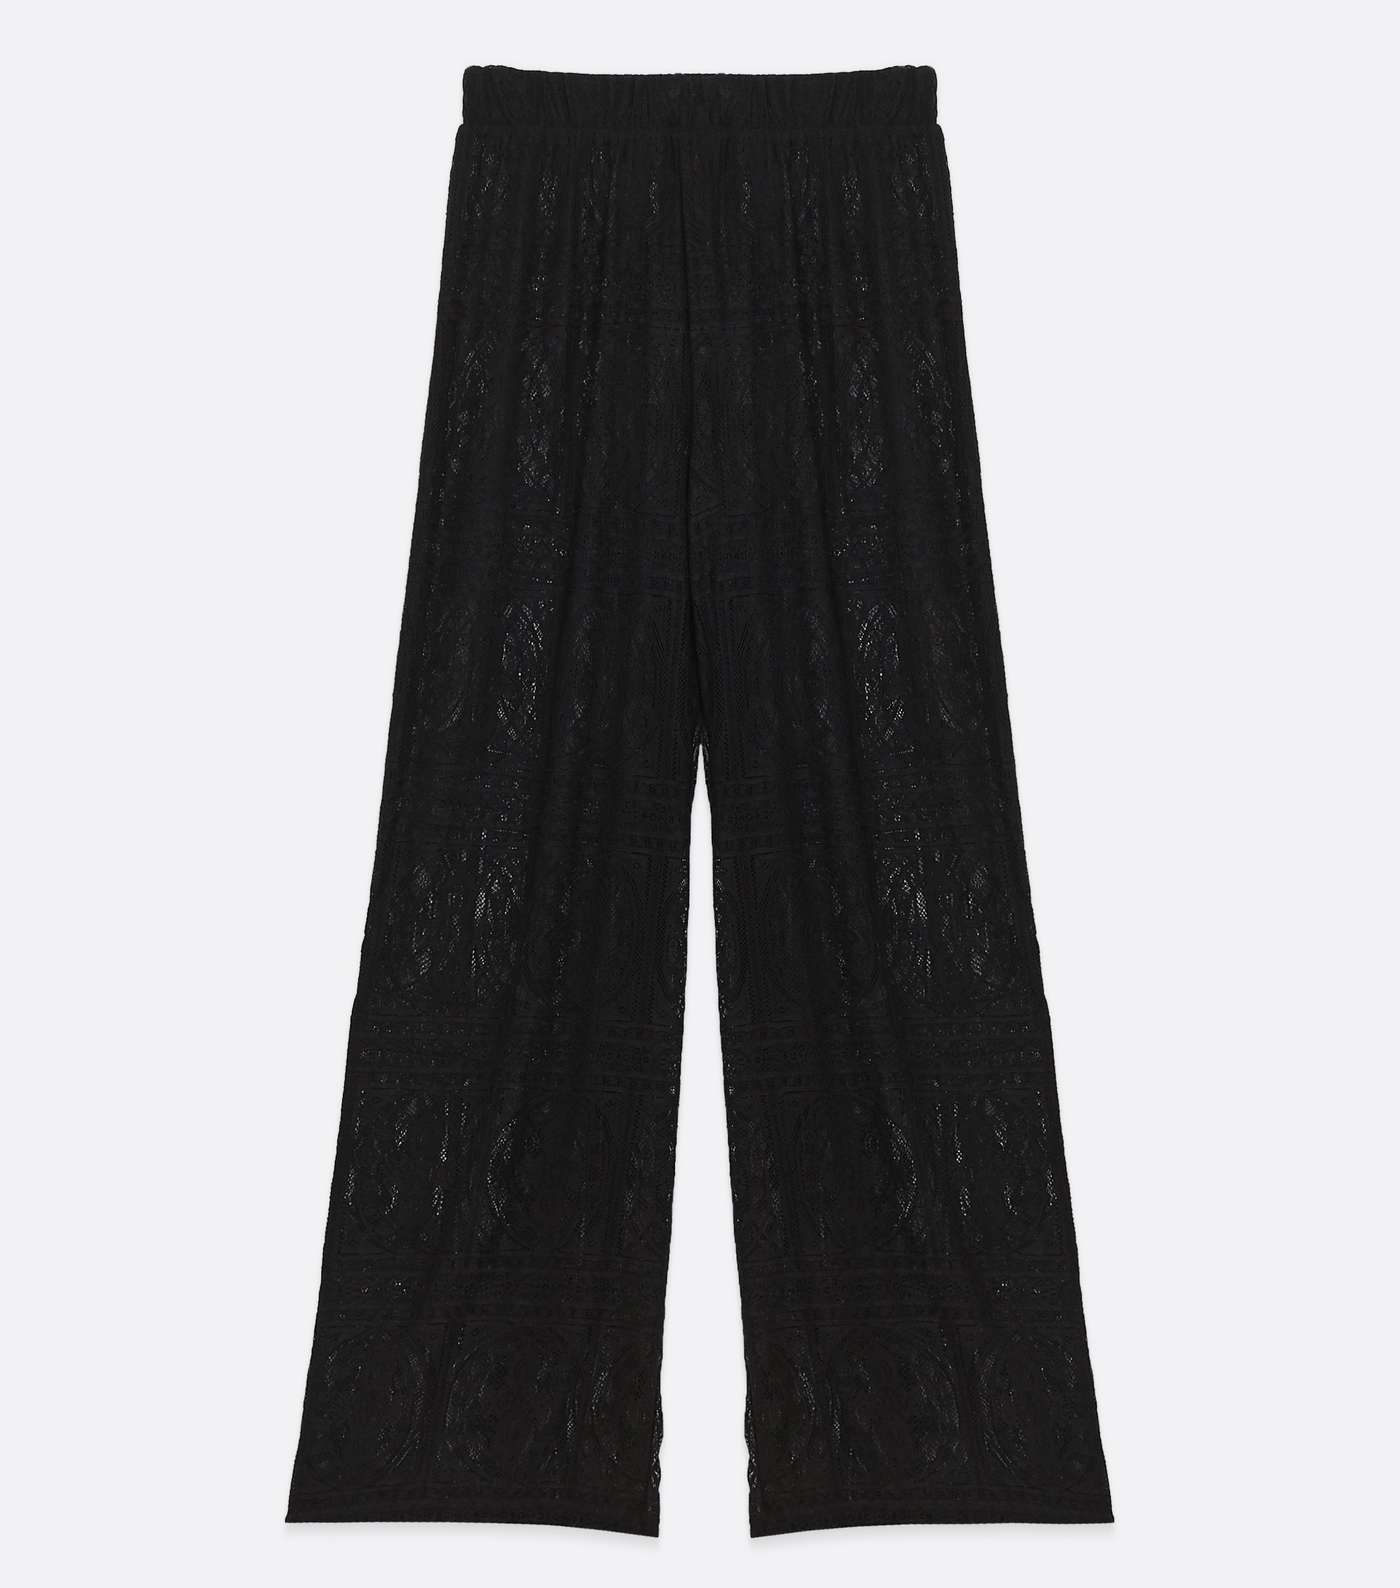 Black Crochet Lace Beach Trousers Image 5